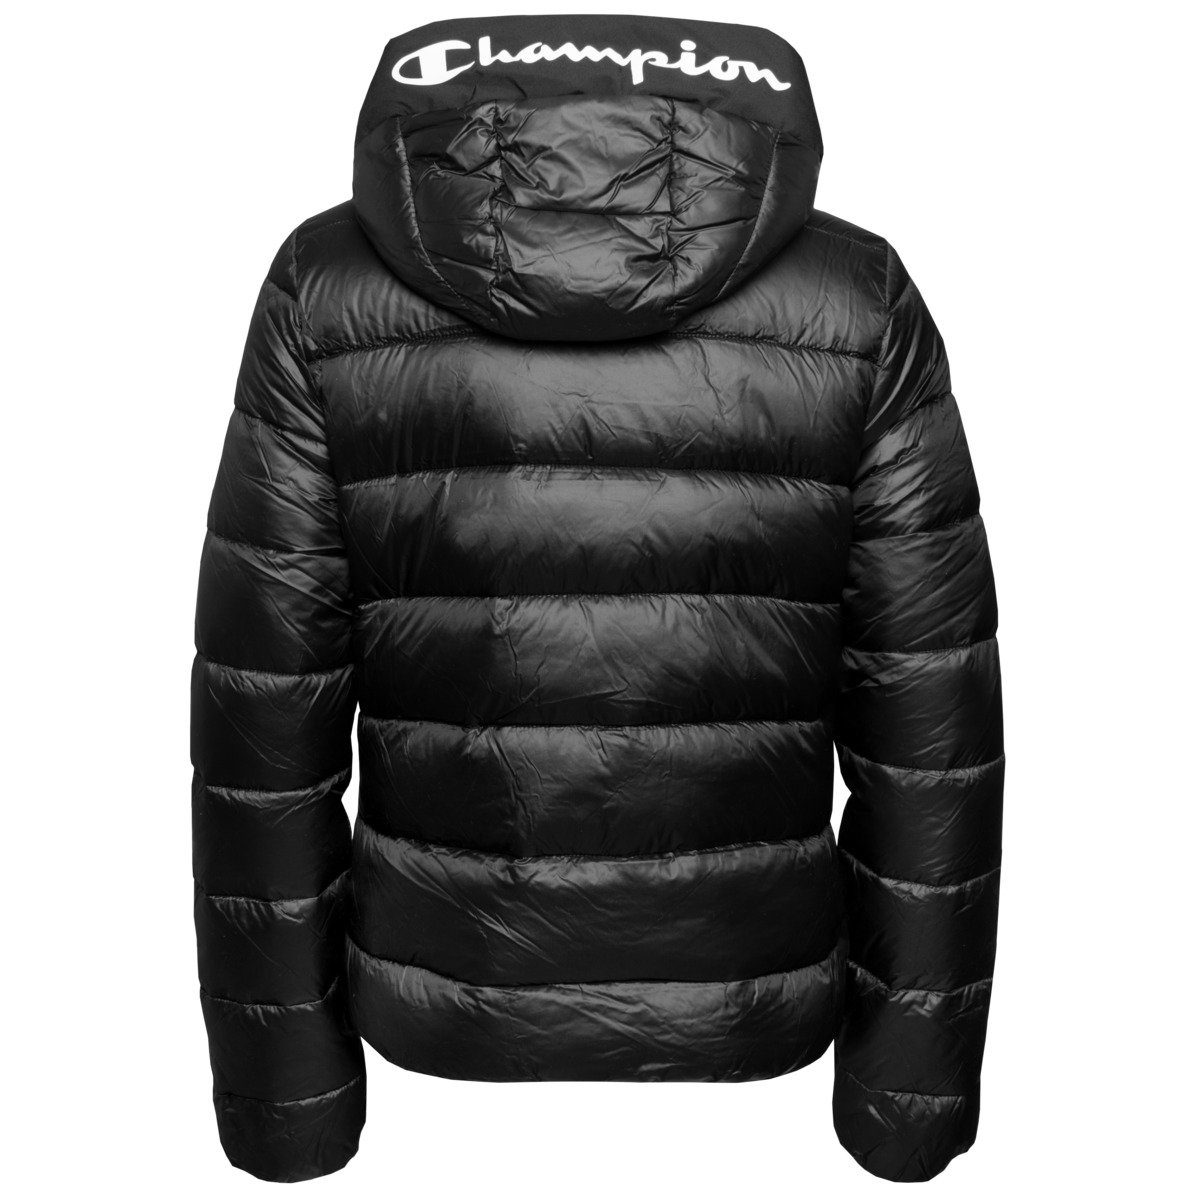 Champion Damen Winterjacke Hooded schwarz Polyfilled